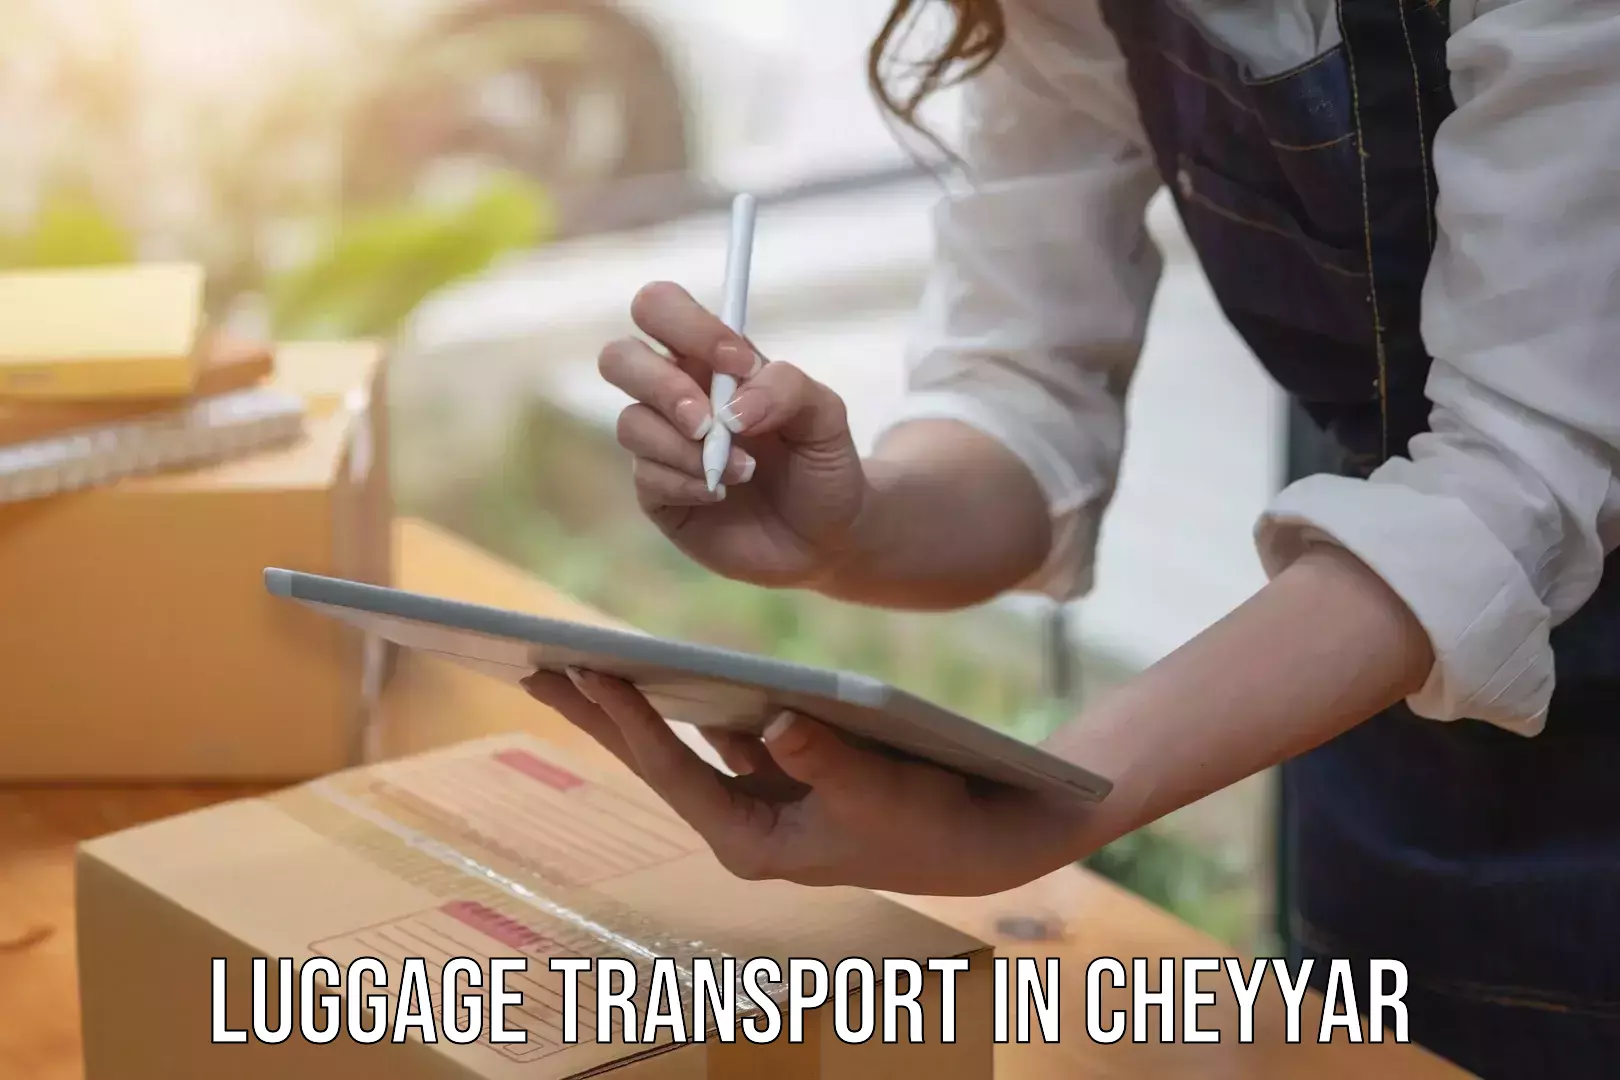 Luggage transfer service in Cheyyar